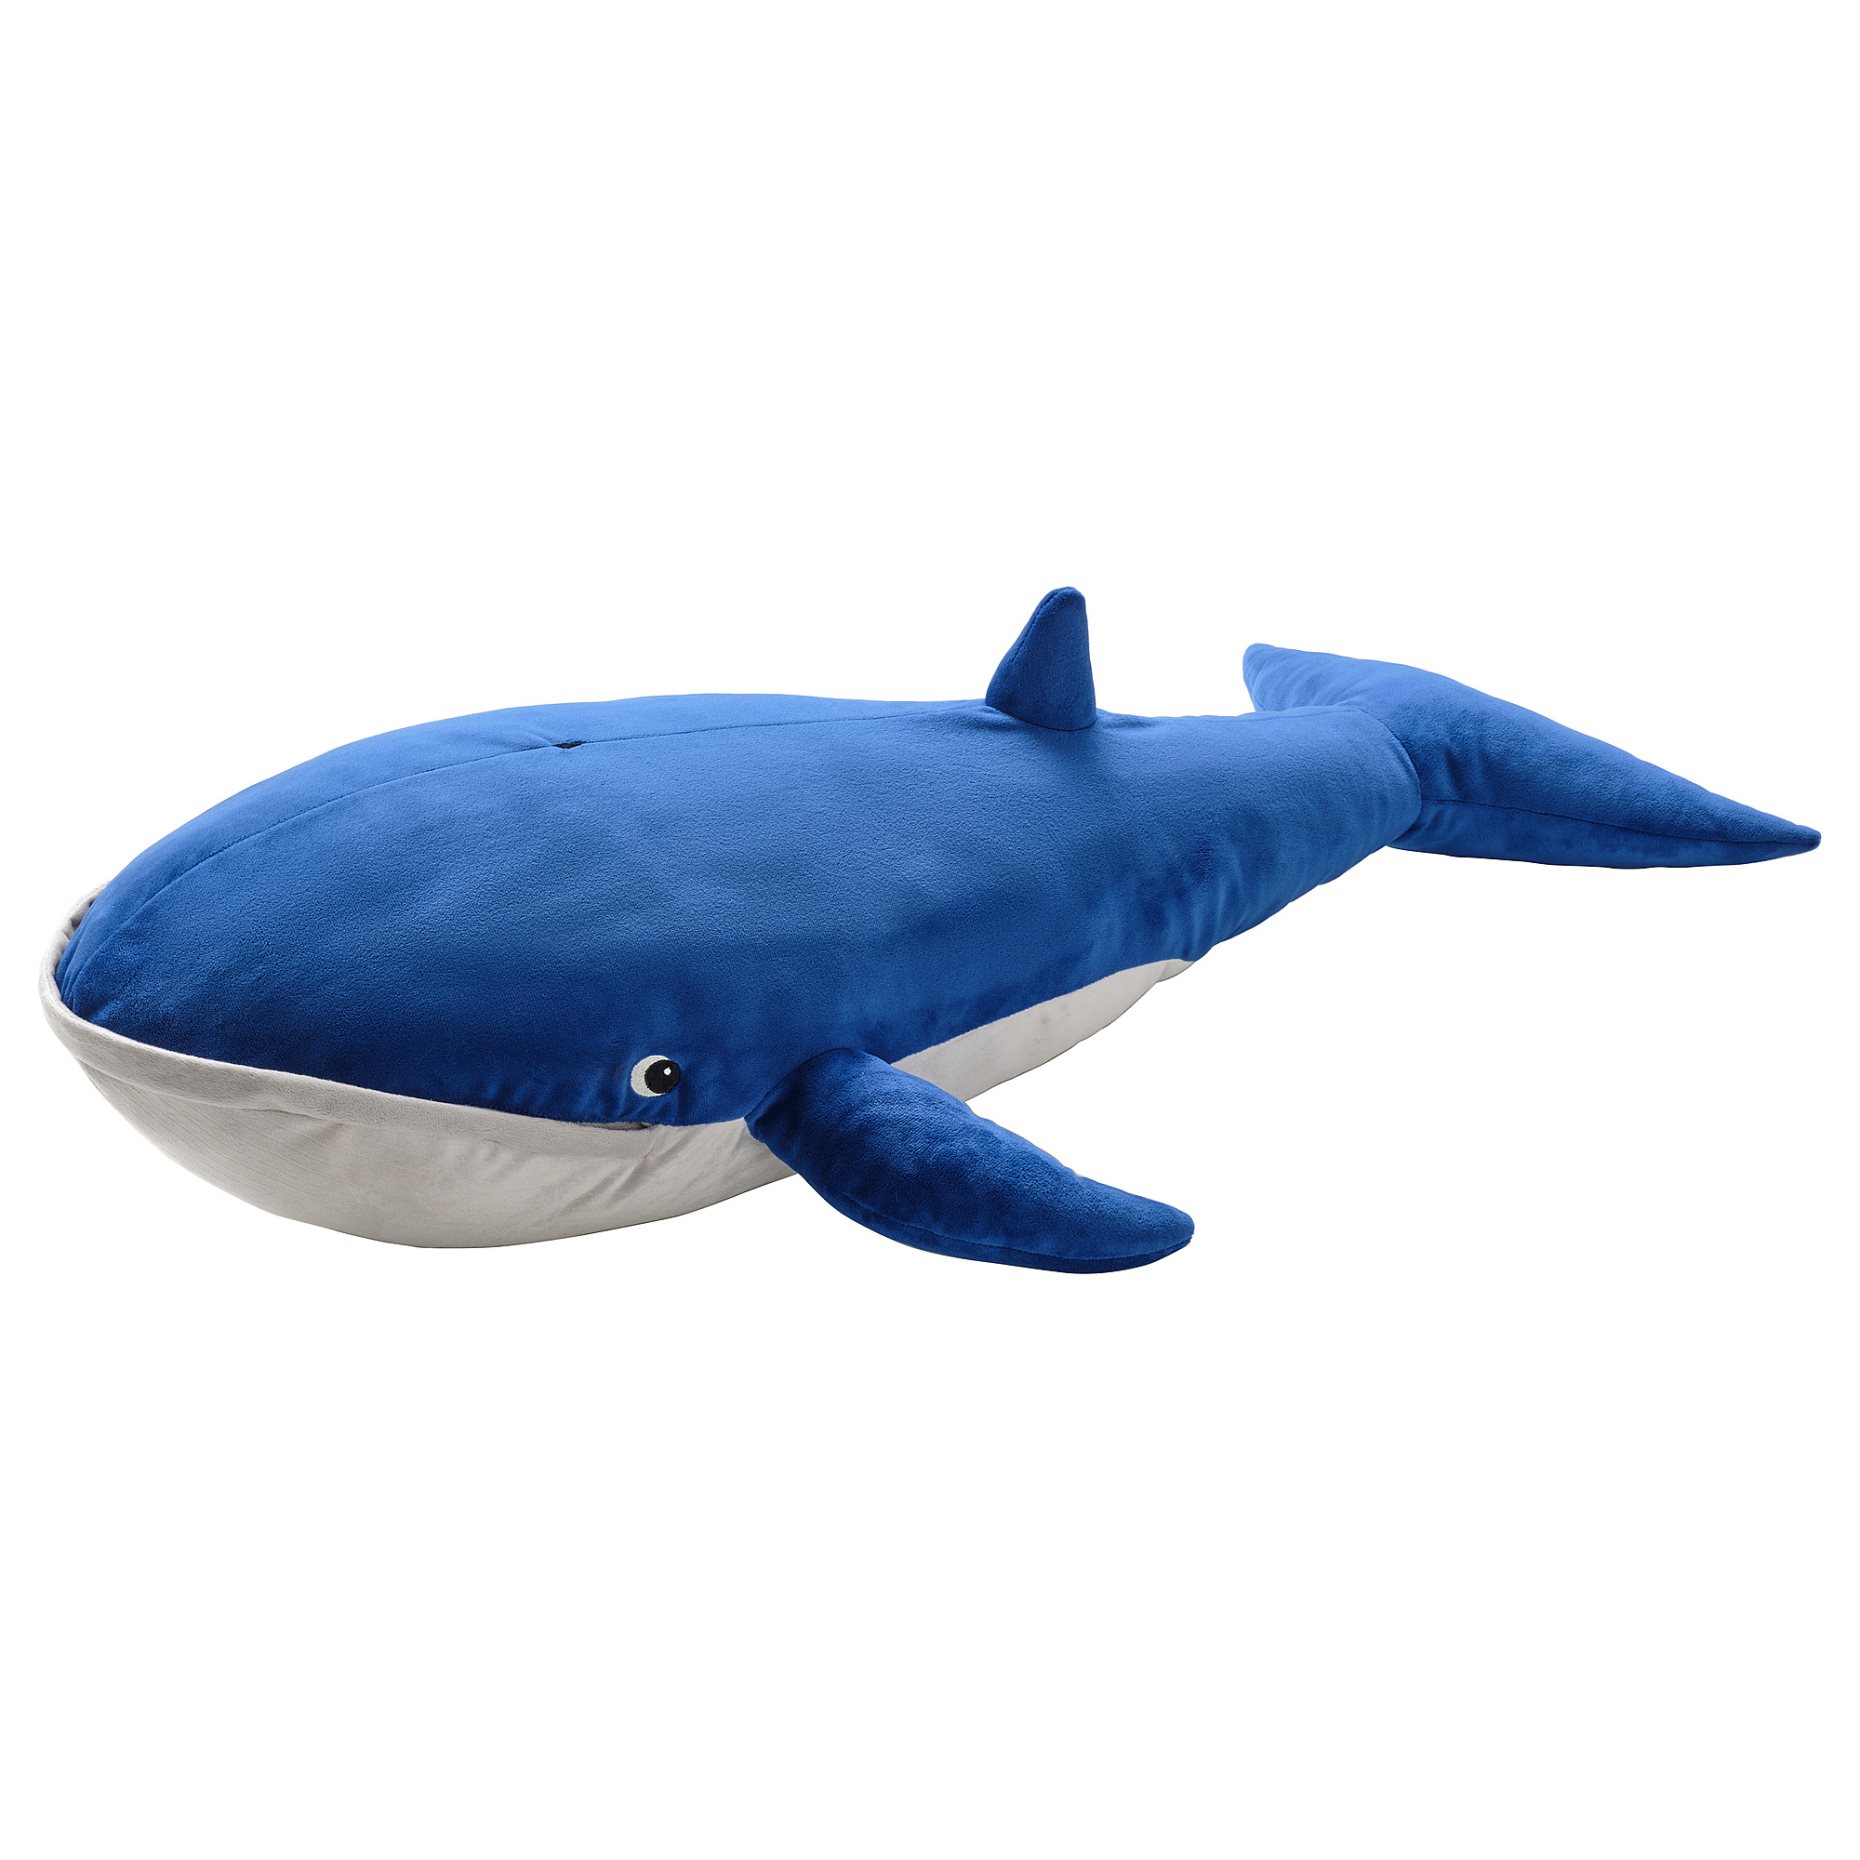 BLÅVINGAD, λούτρινο παιχνίδι/φάλαινα, 100 cm, 005.221.13